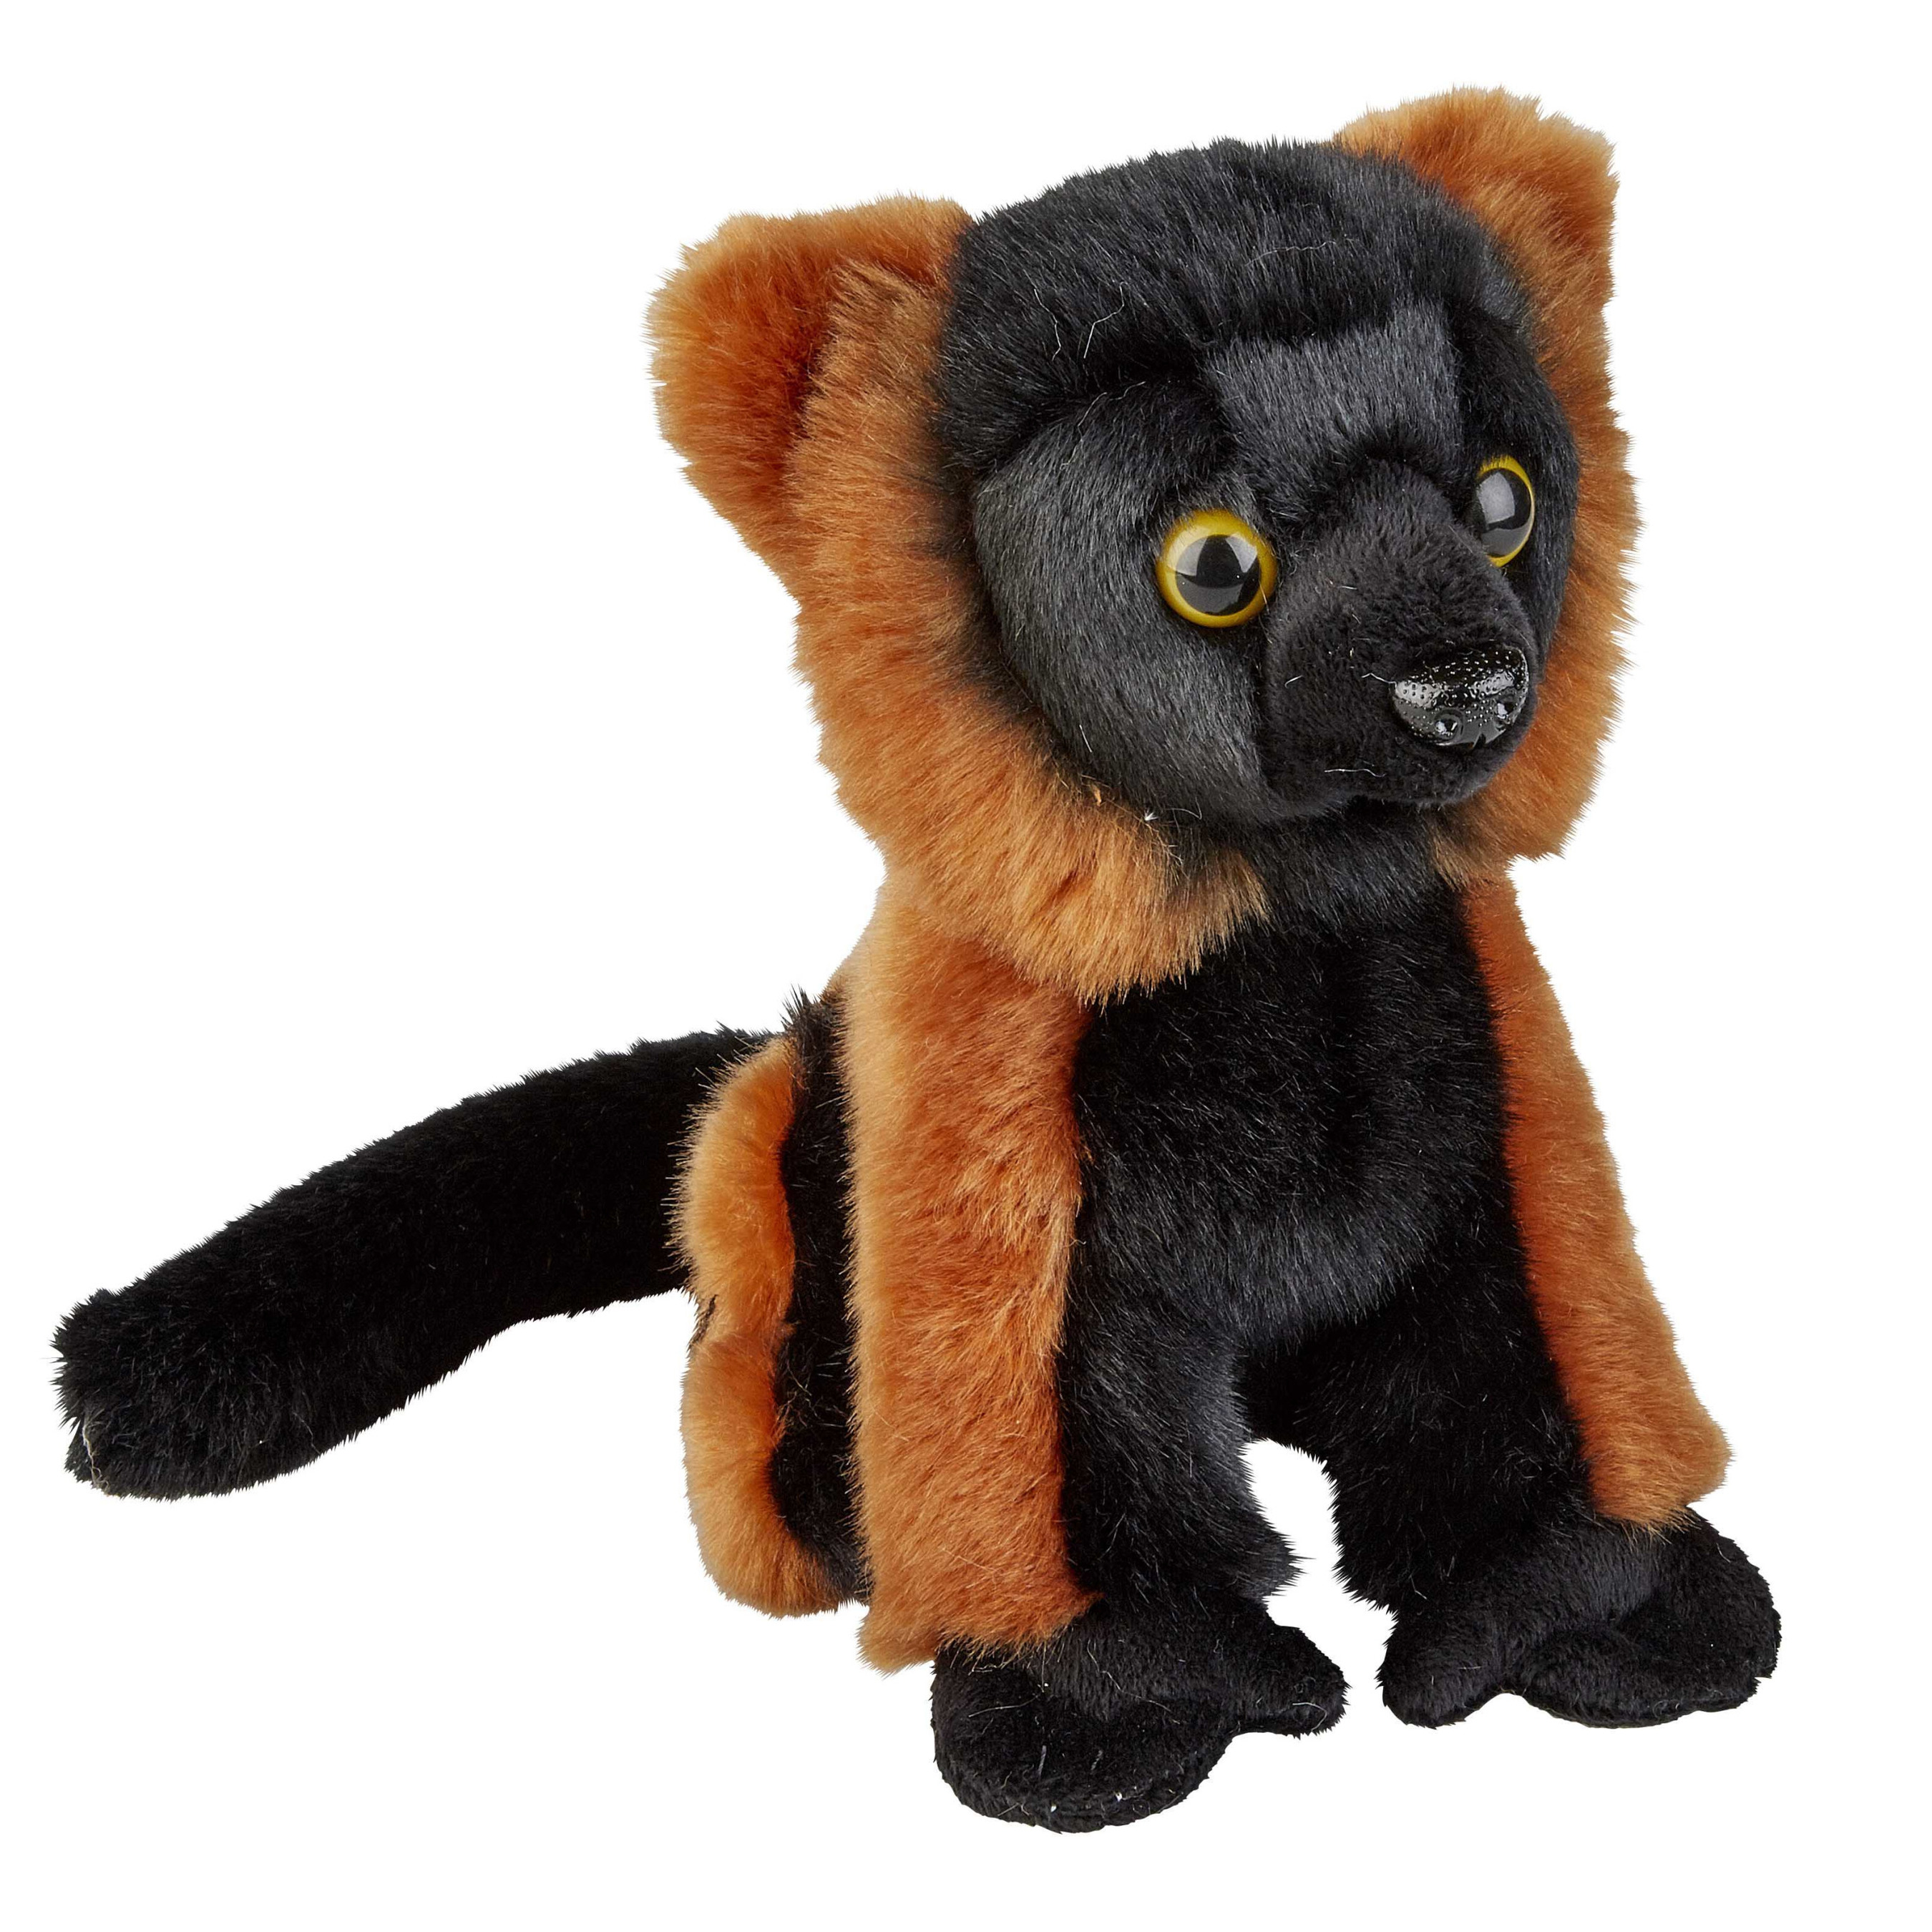 Ravensden Pluche knuffel dieren rood/zwart Lemur aapje 18 cm -